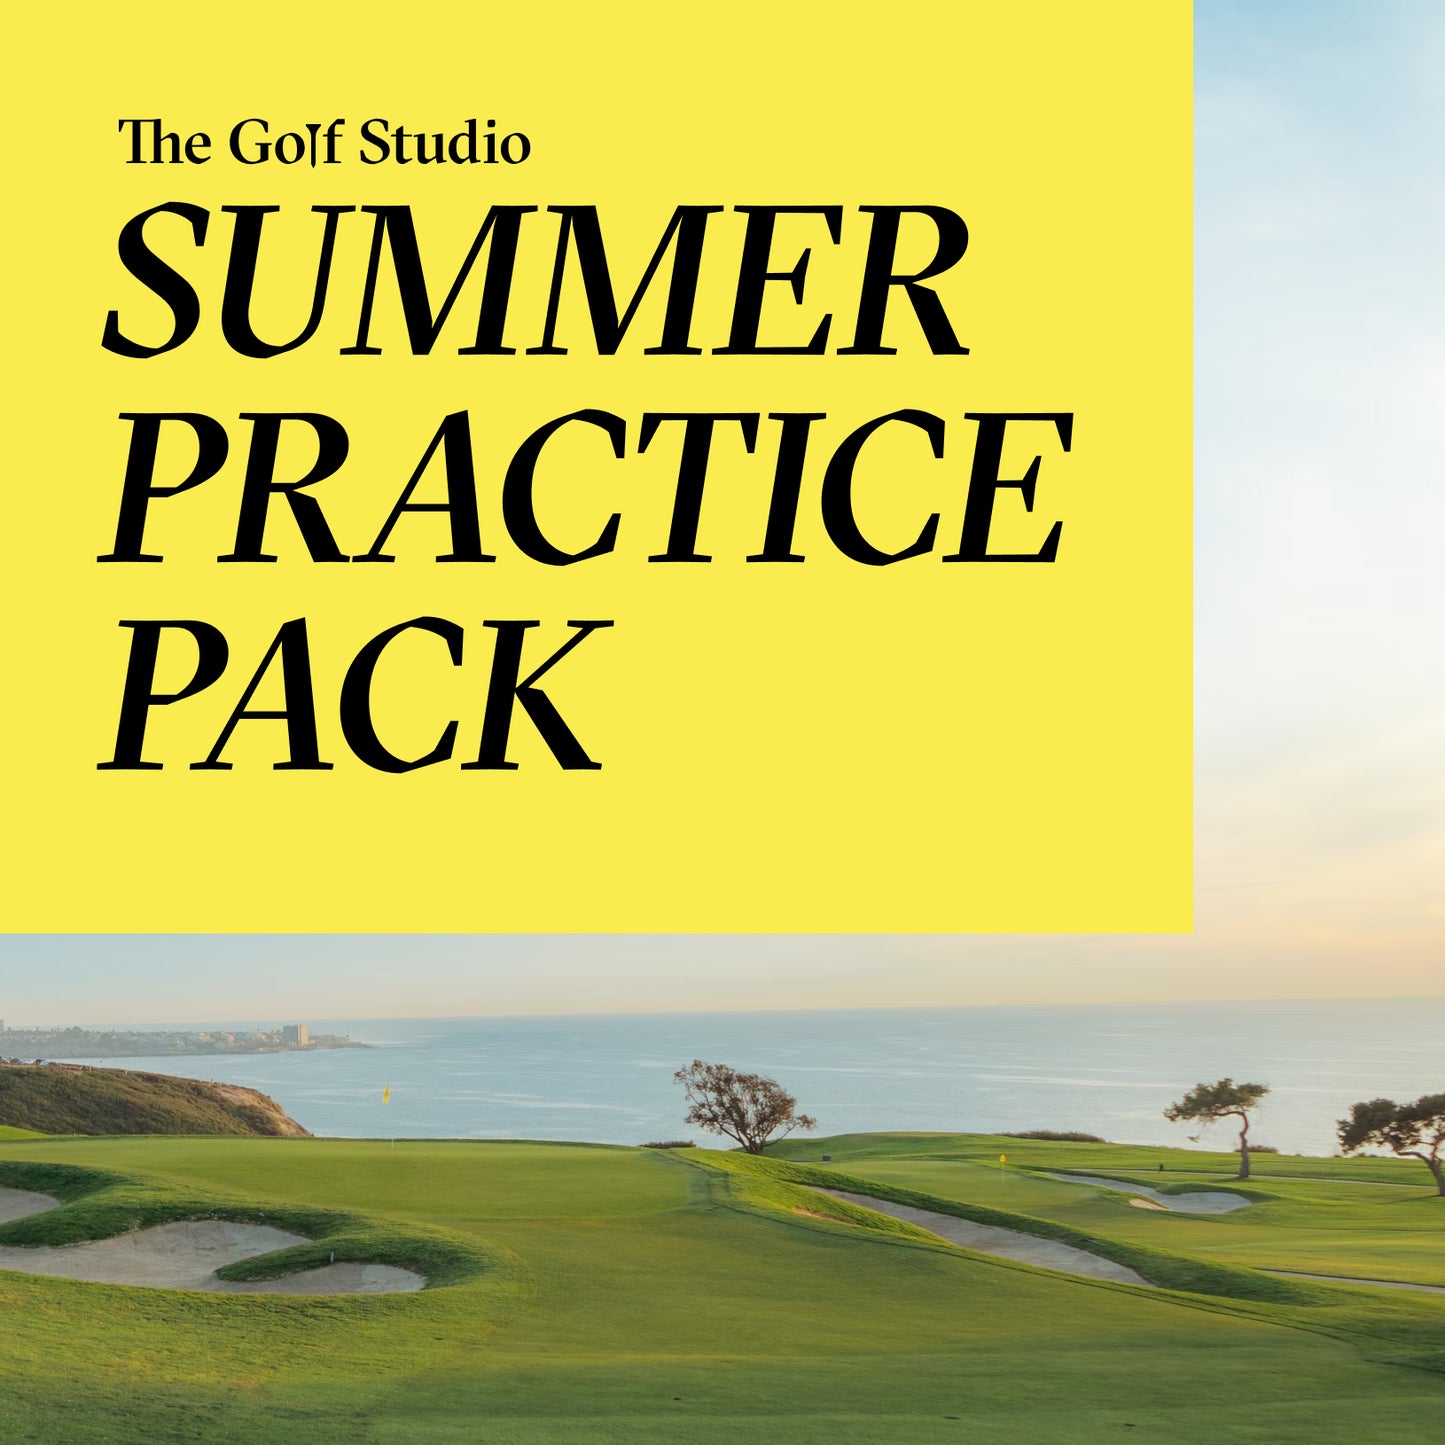 The Golf Studio Summer Practice Pack